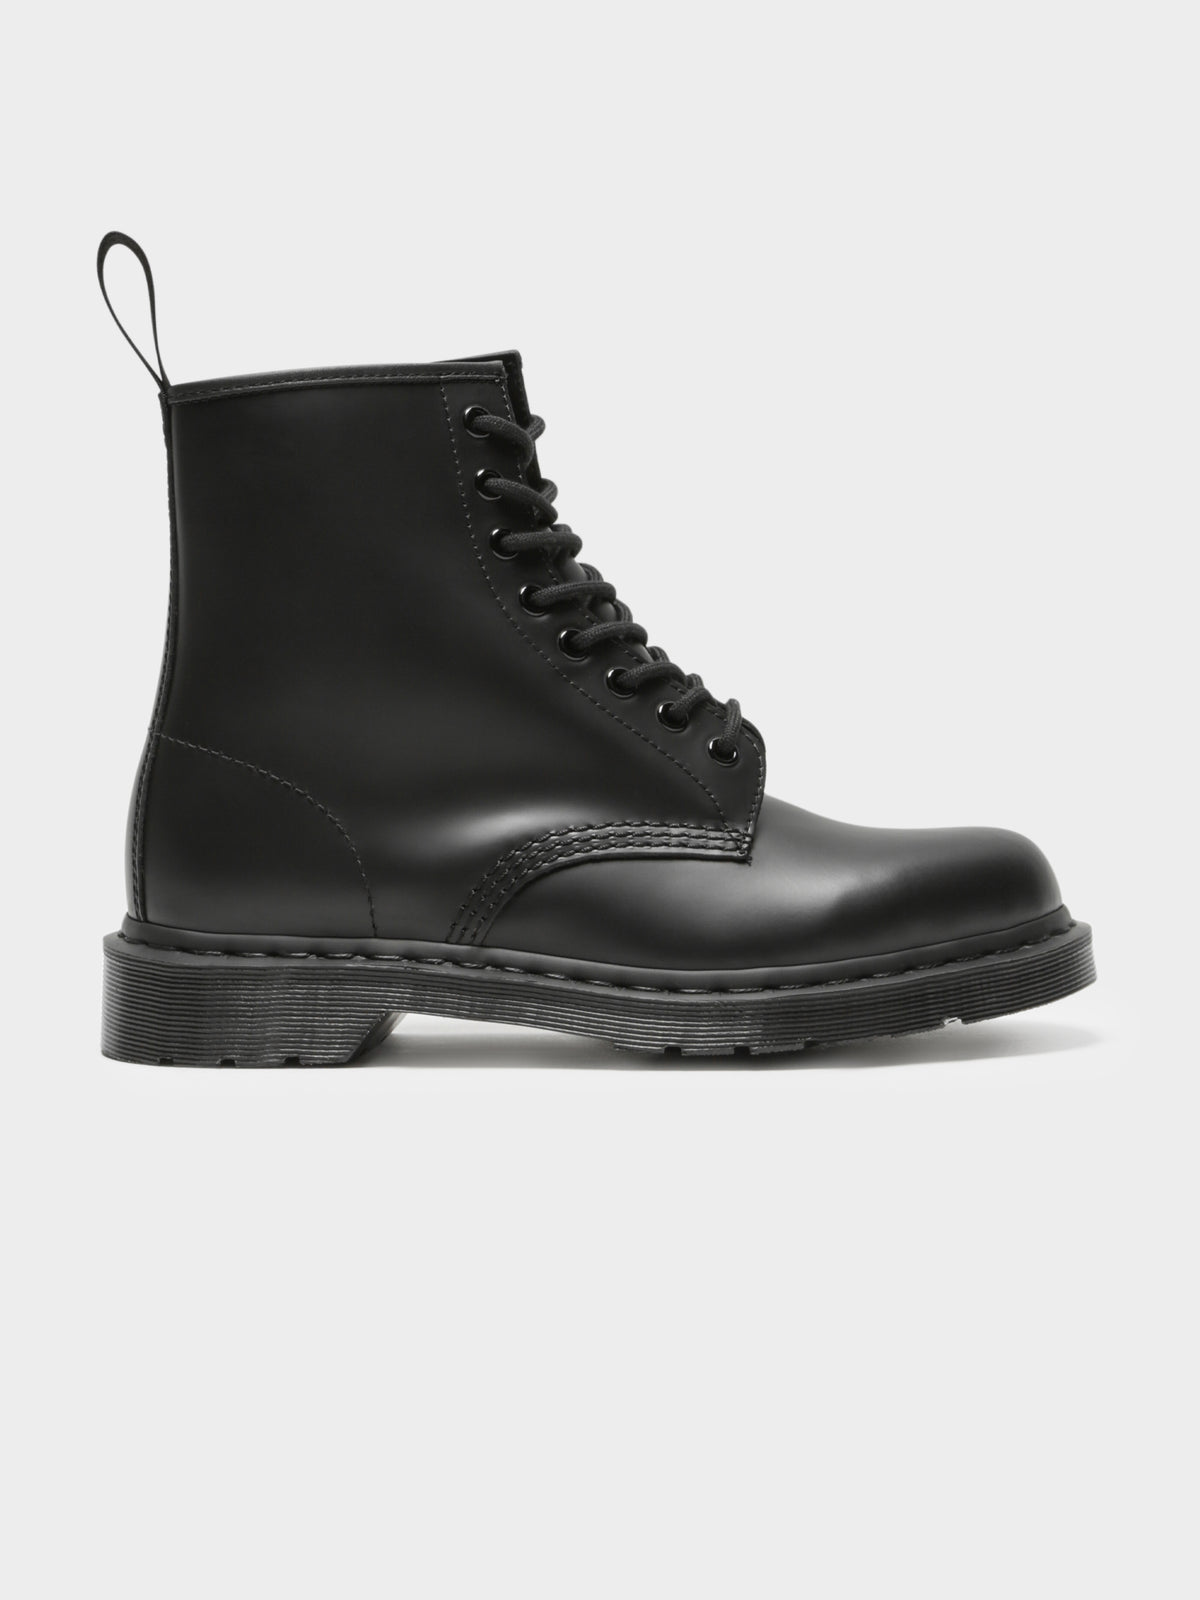 Unisex 1460 Mono Boots in Black